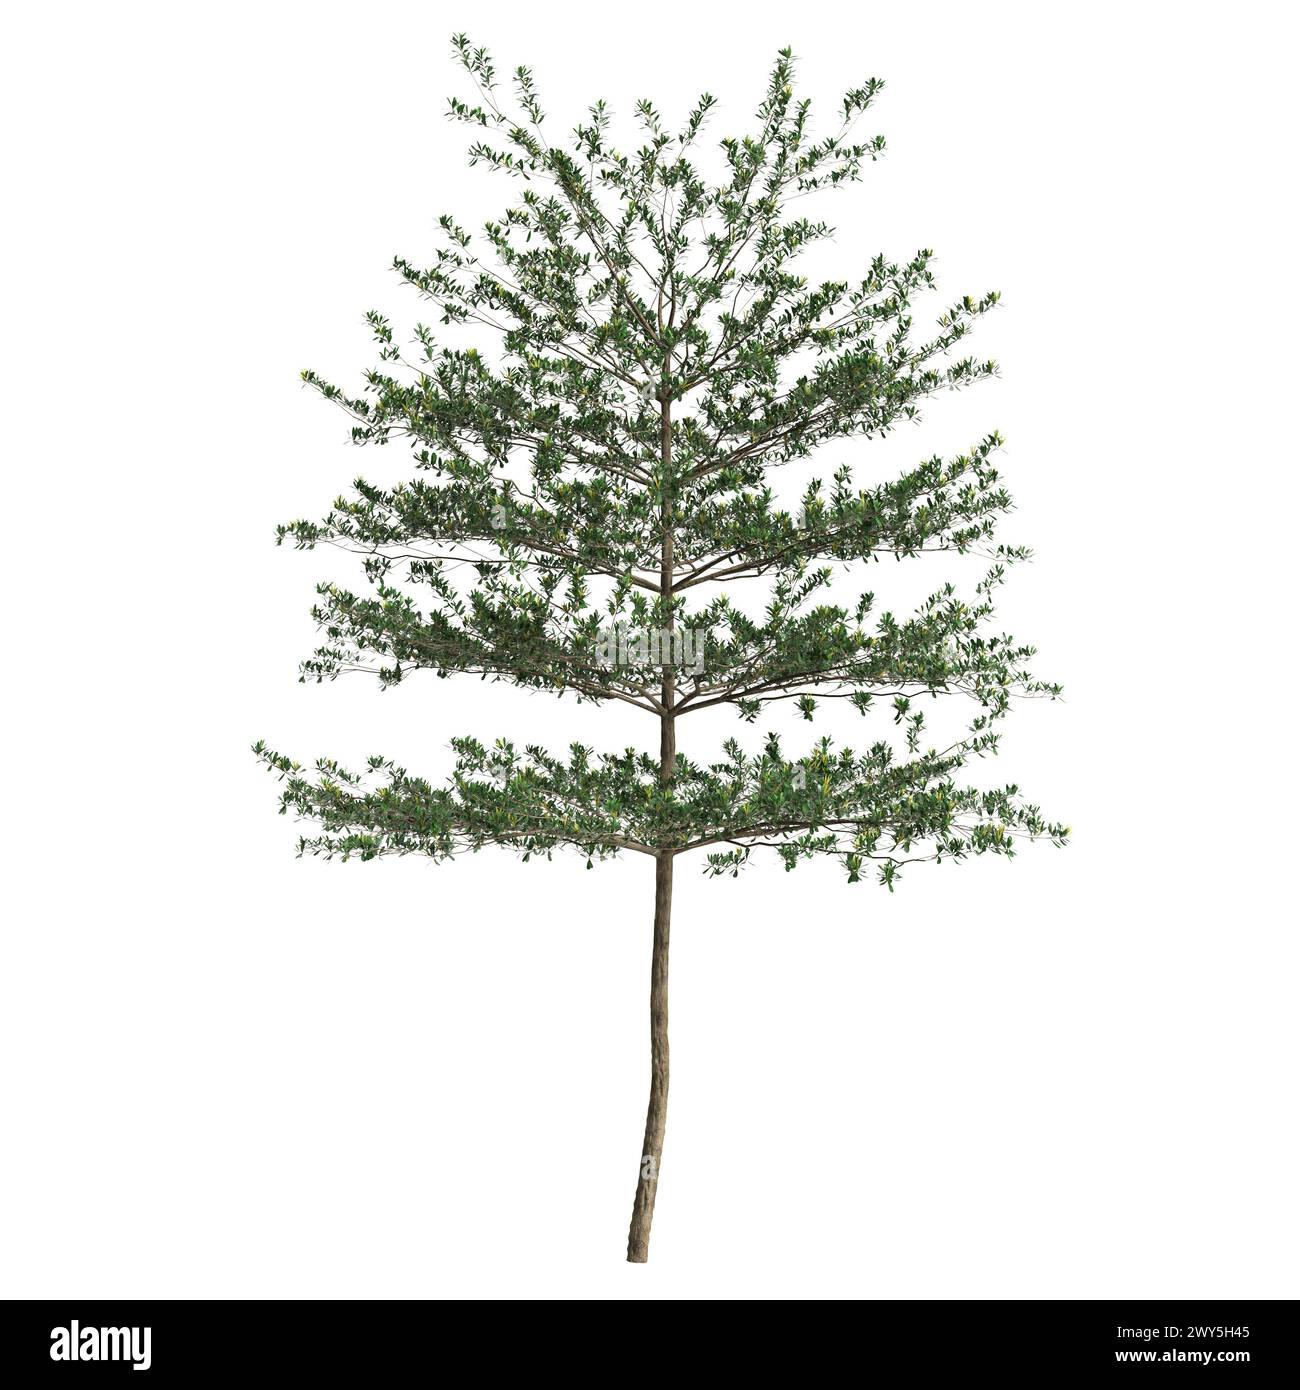 3d illustration of Terminalia Mantaly tree isolated on white background Stock Photo